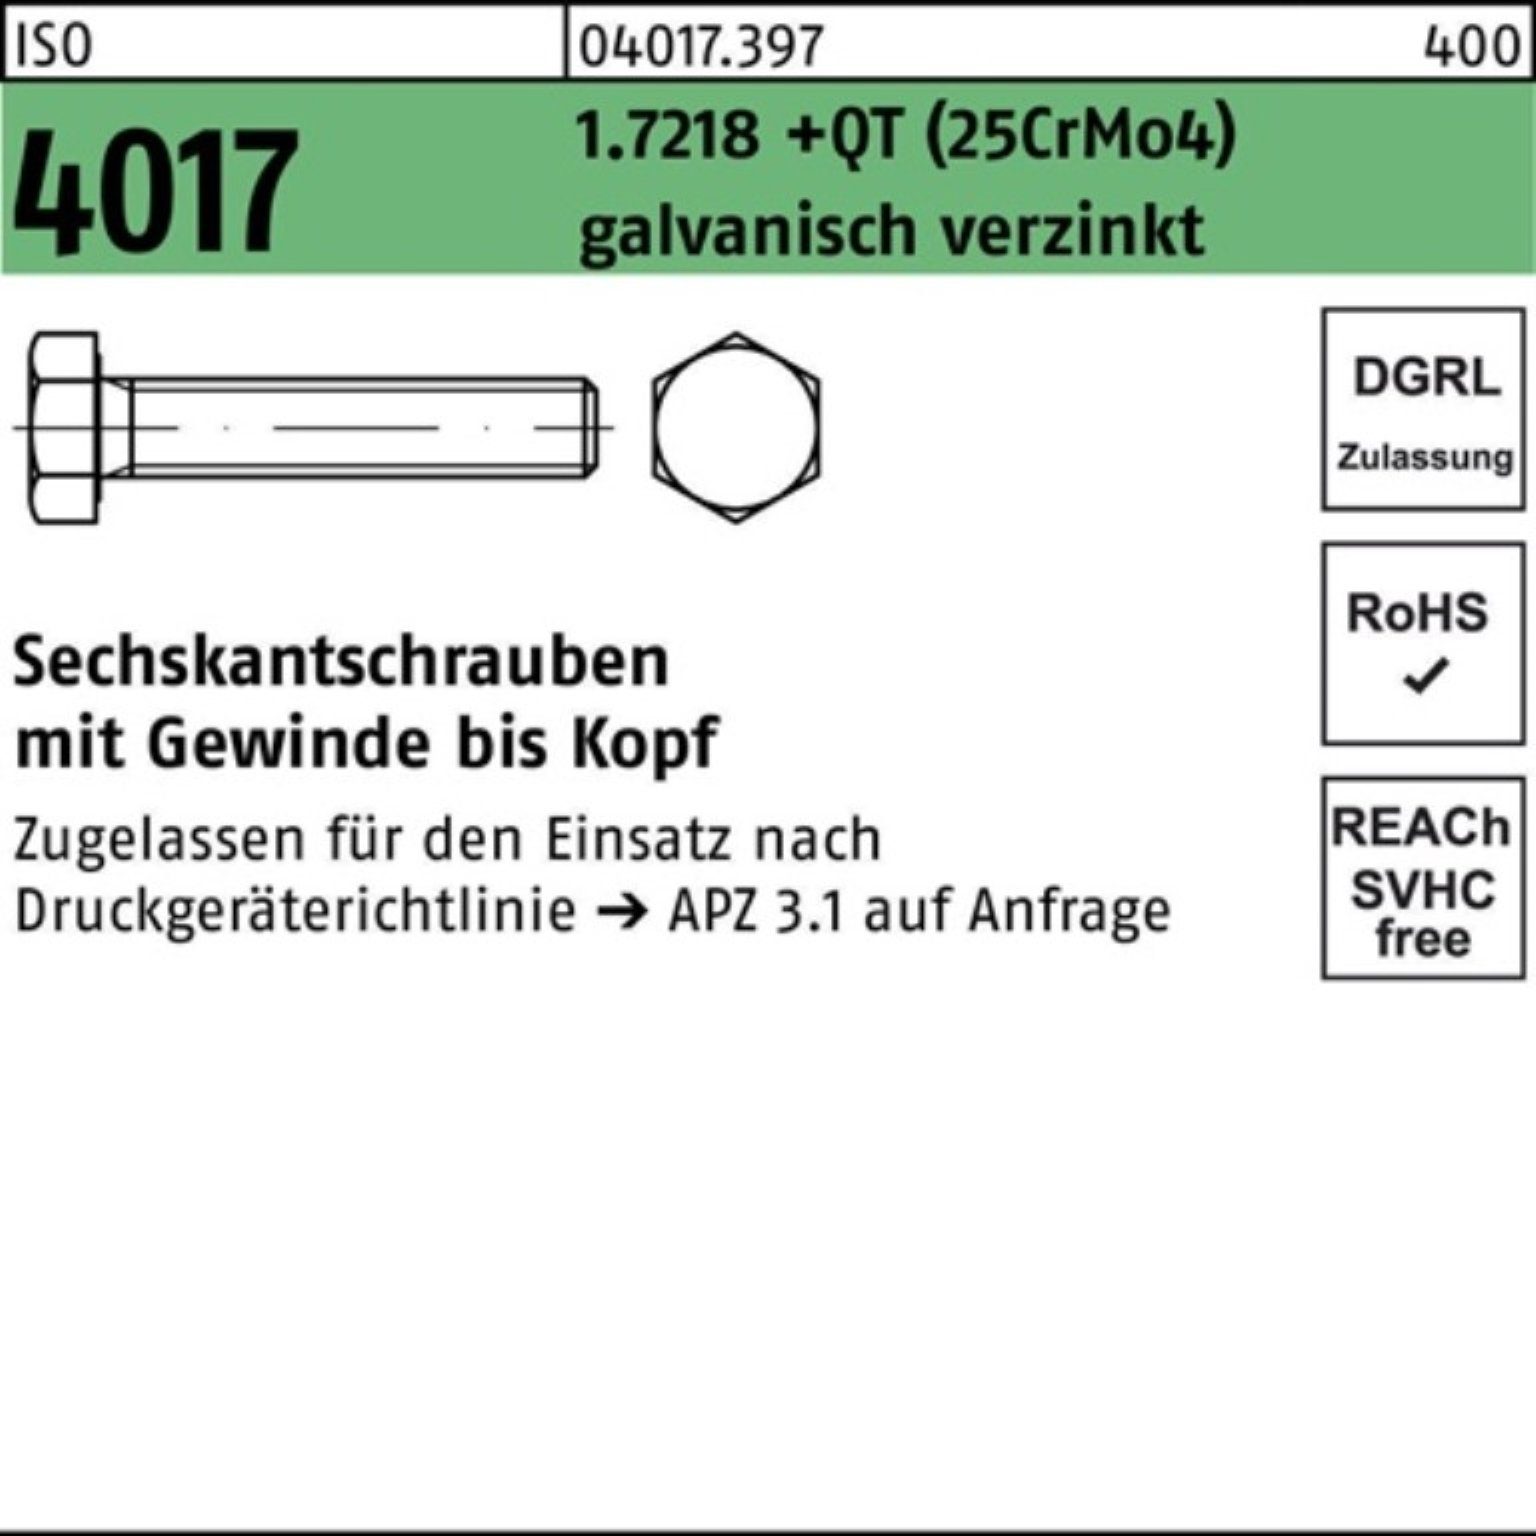 Sechskantschraube ISO 1.7218 +QT Sechskantschraube 100er M16x40 (25CrMo4) Bufab VG Pack 4017 g